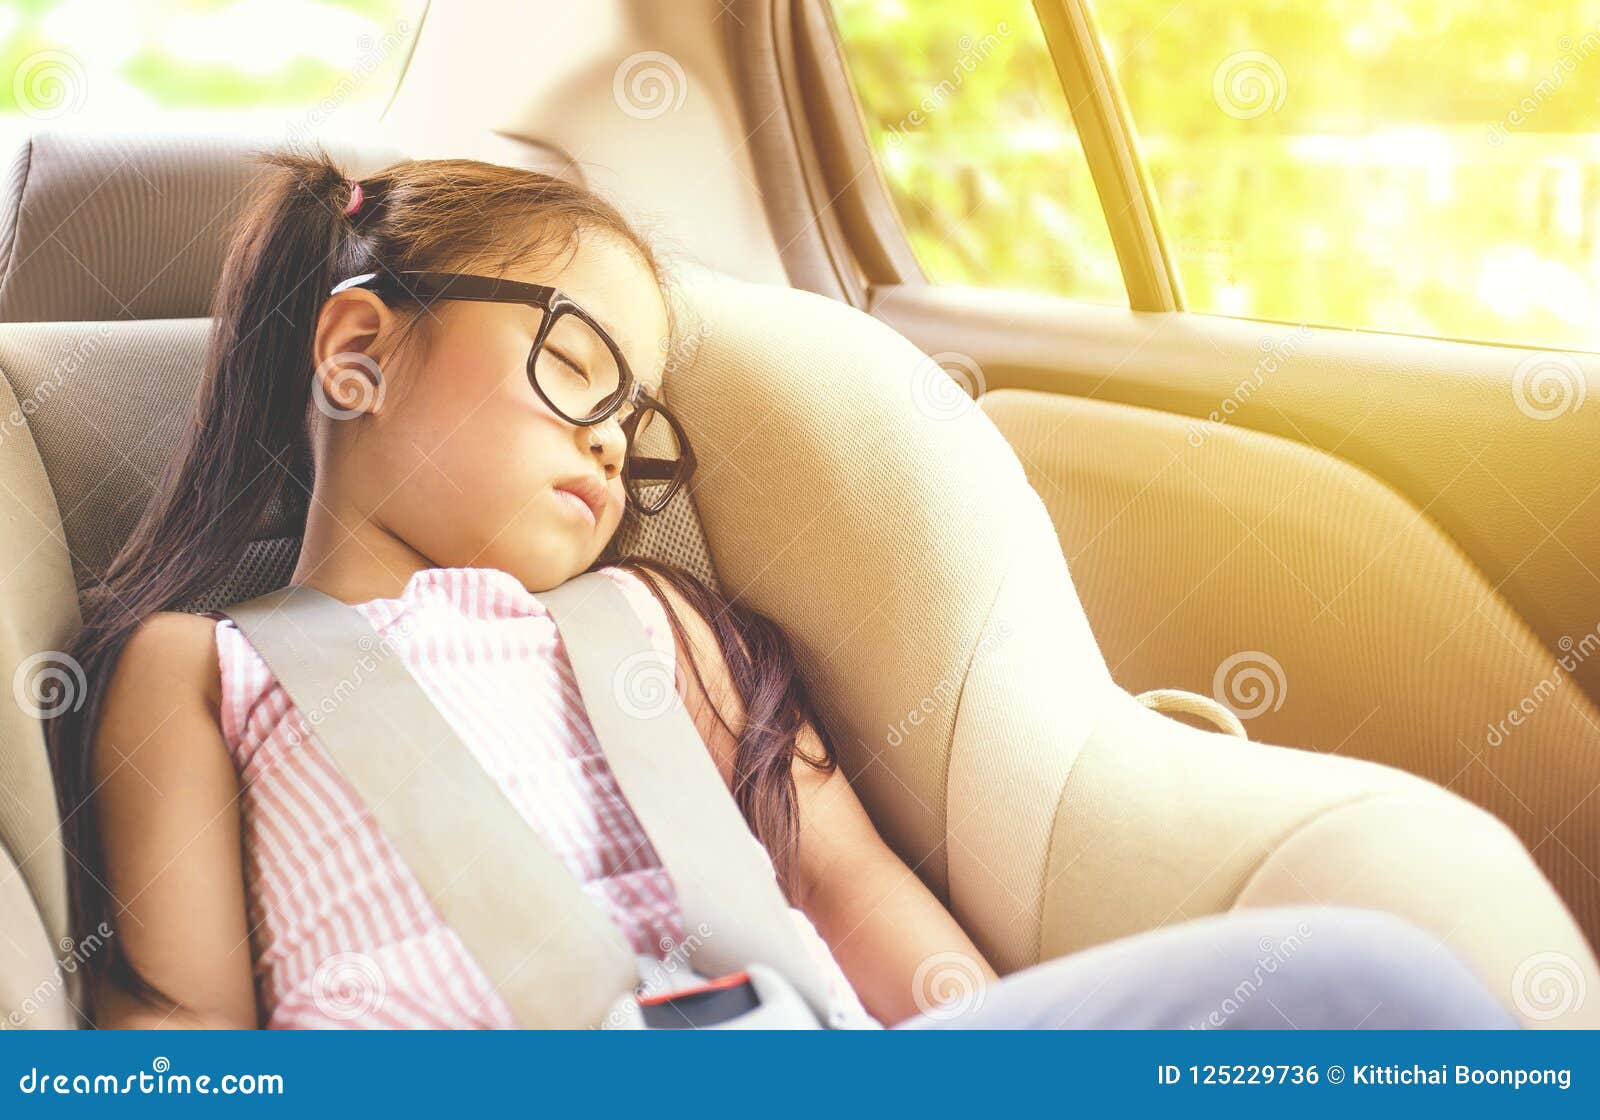 girl sleeping in child car seat.